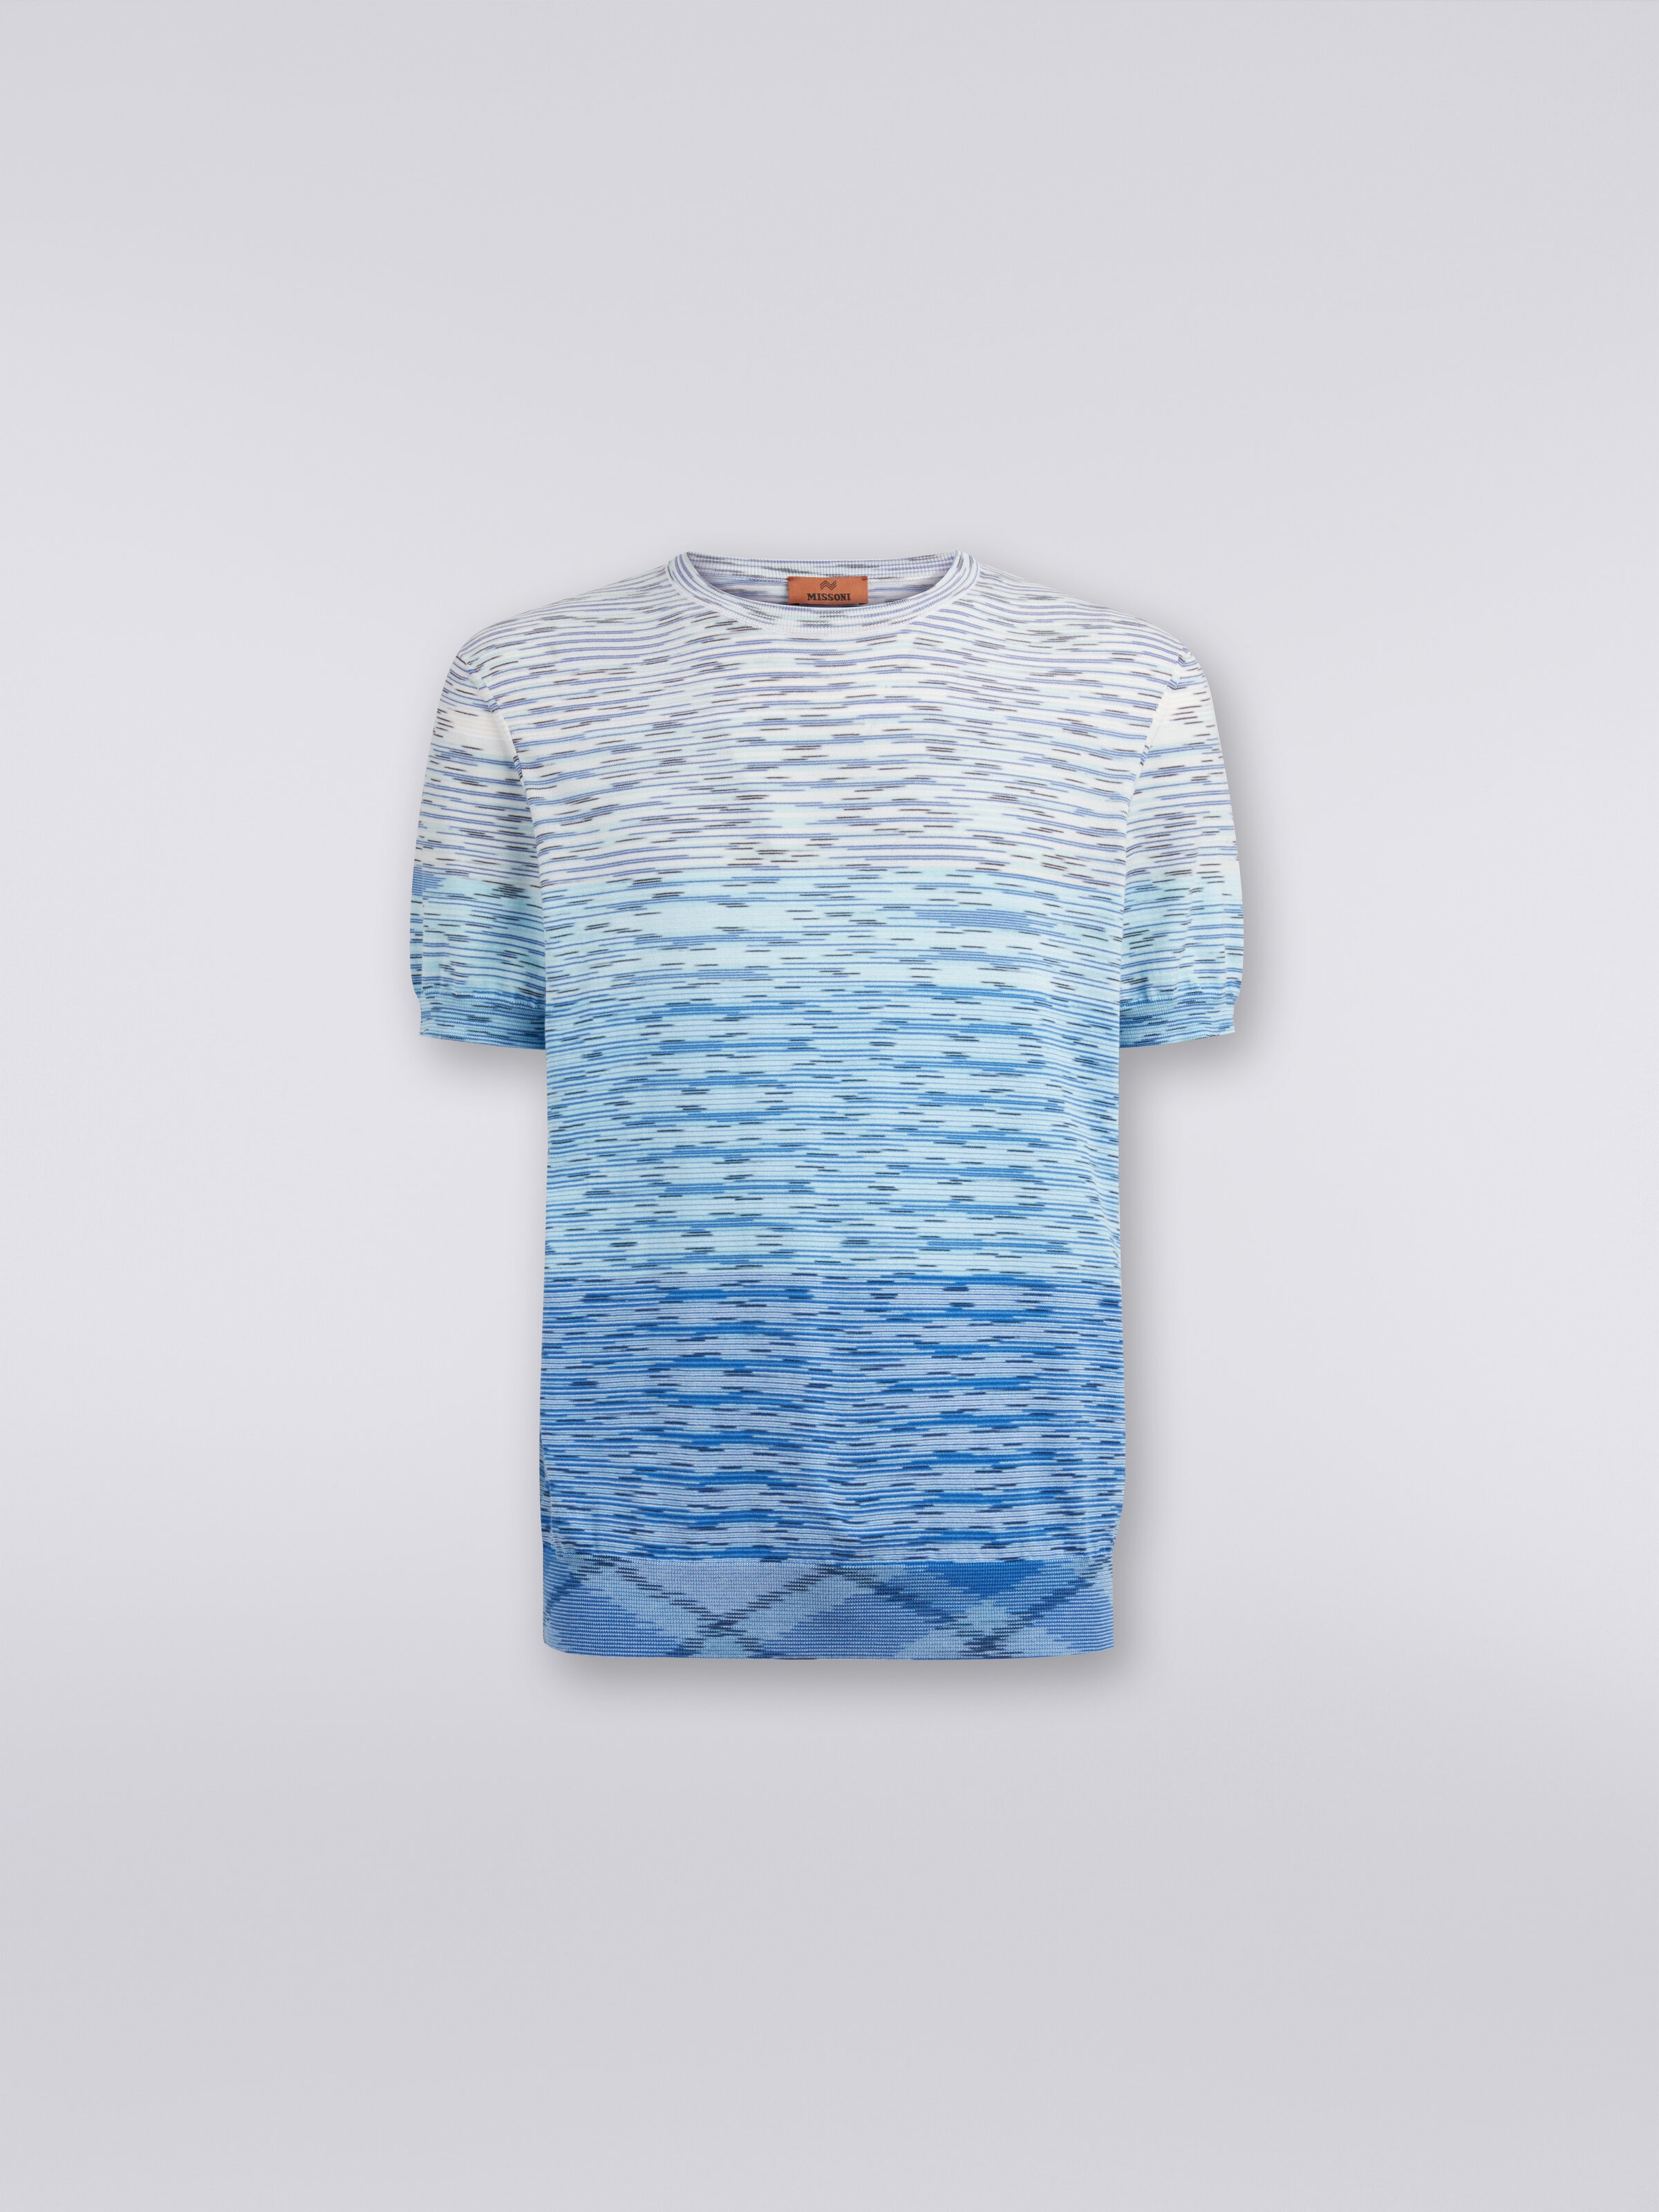 Crew-neck T-shirt in dégradé slub cotton, Multicoloured  - 0